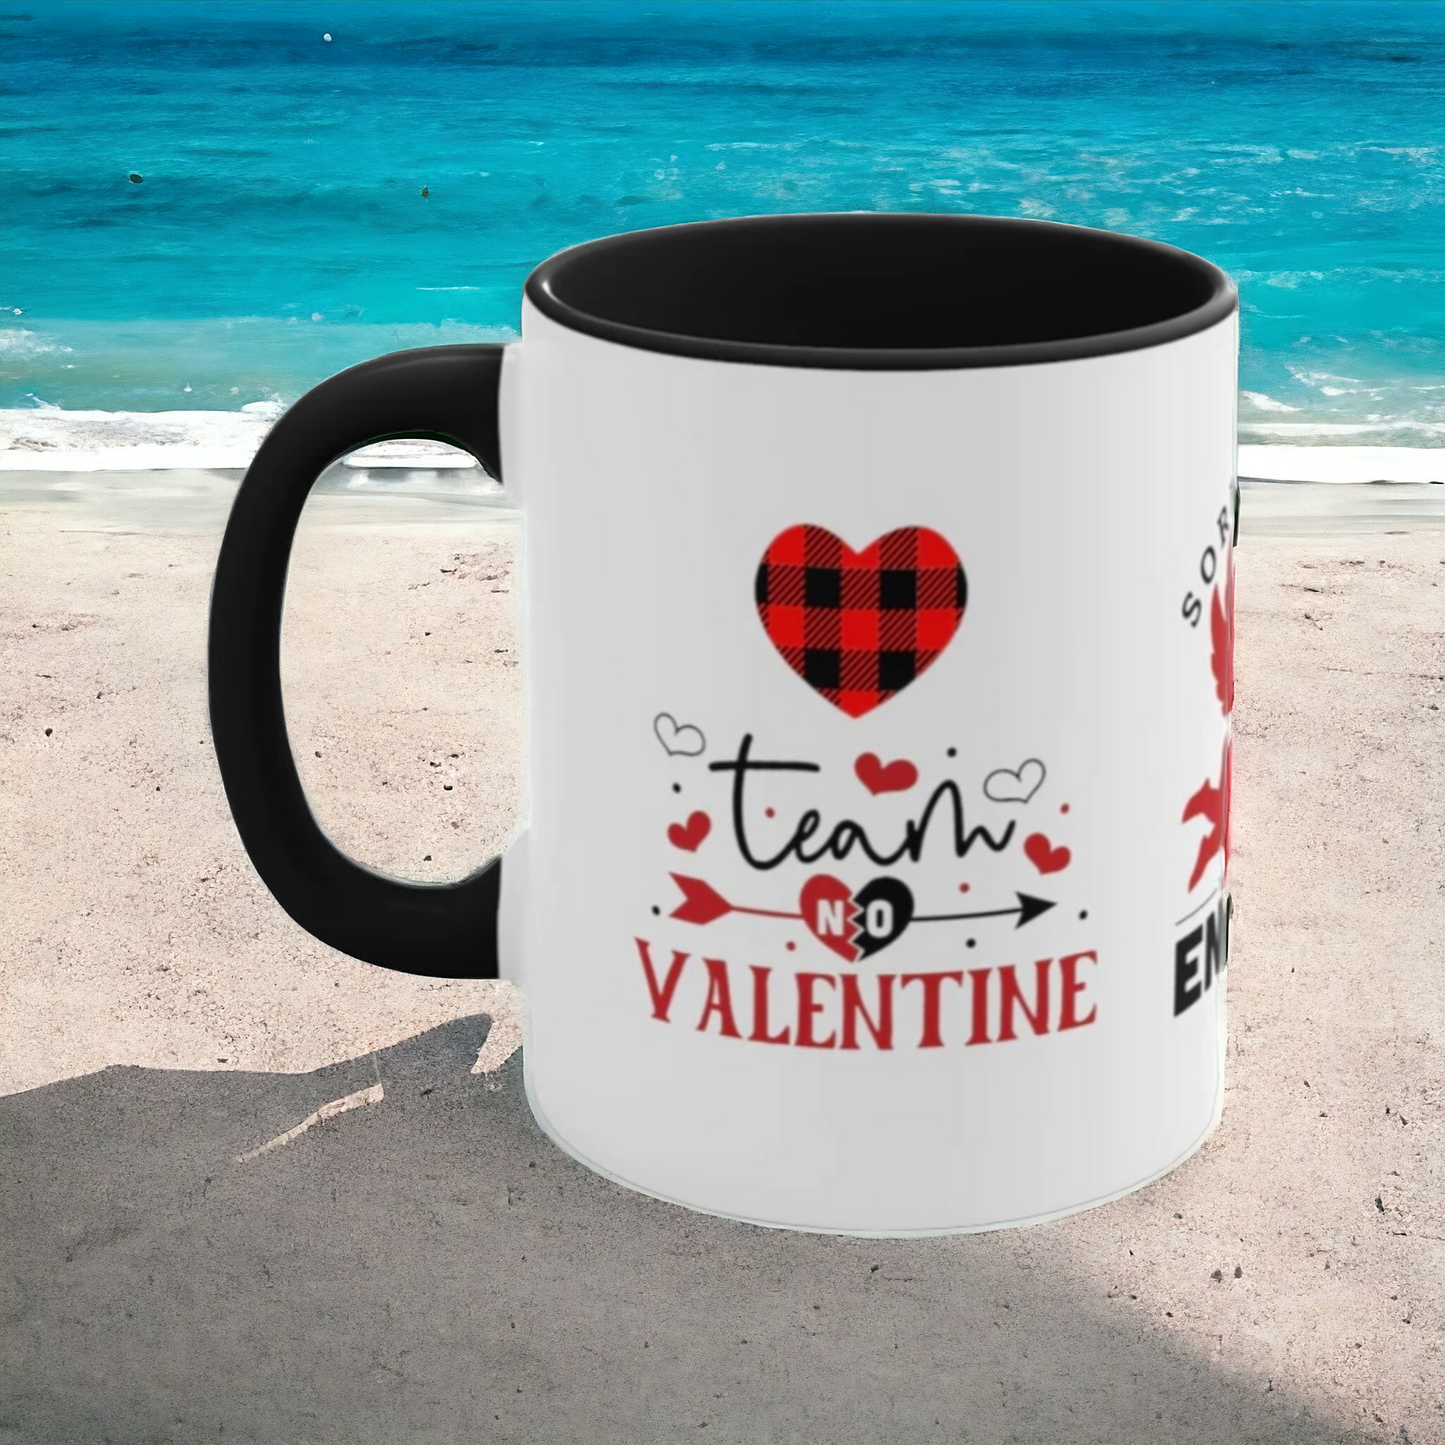 ANTI VALENTINES Funny Cupid Mug - VALENTINE GIFTS - TEAM NO VALENTINE